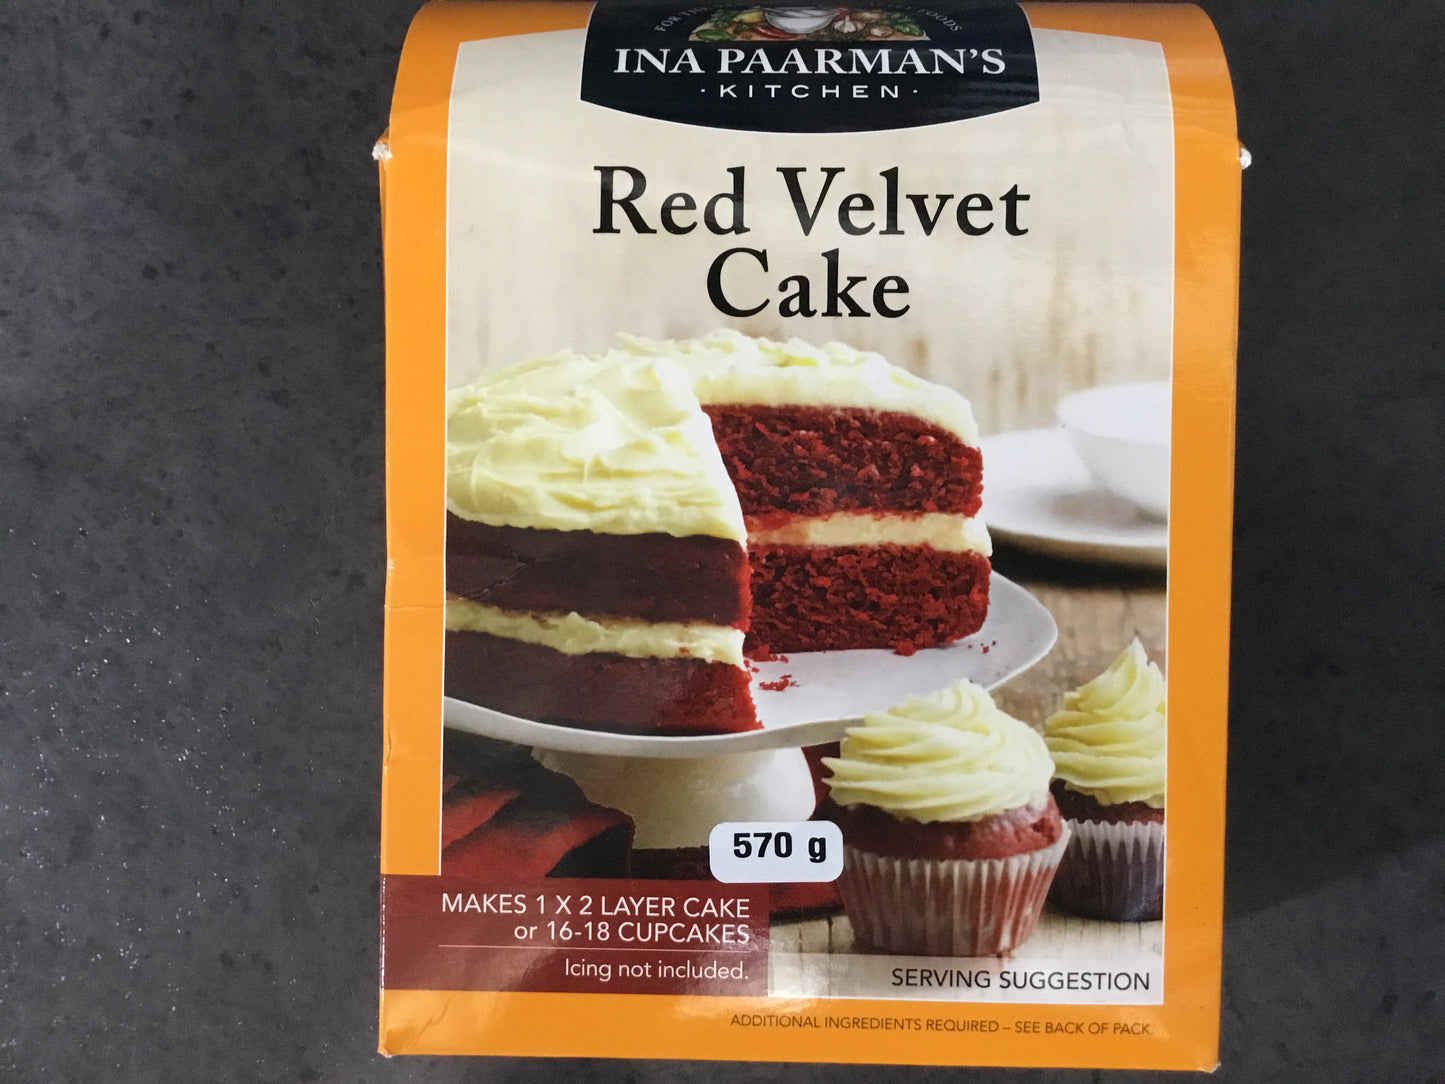 Ina Paarman Red Velvet Cake 570g